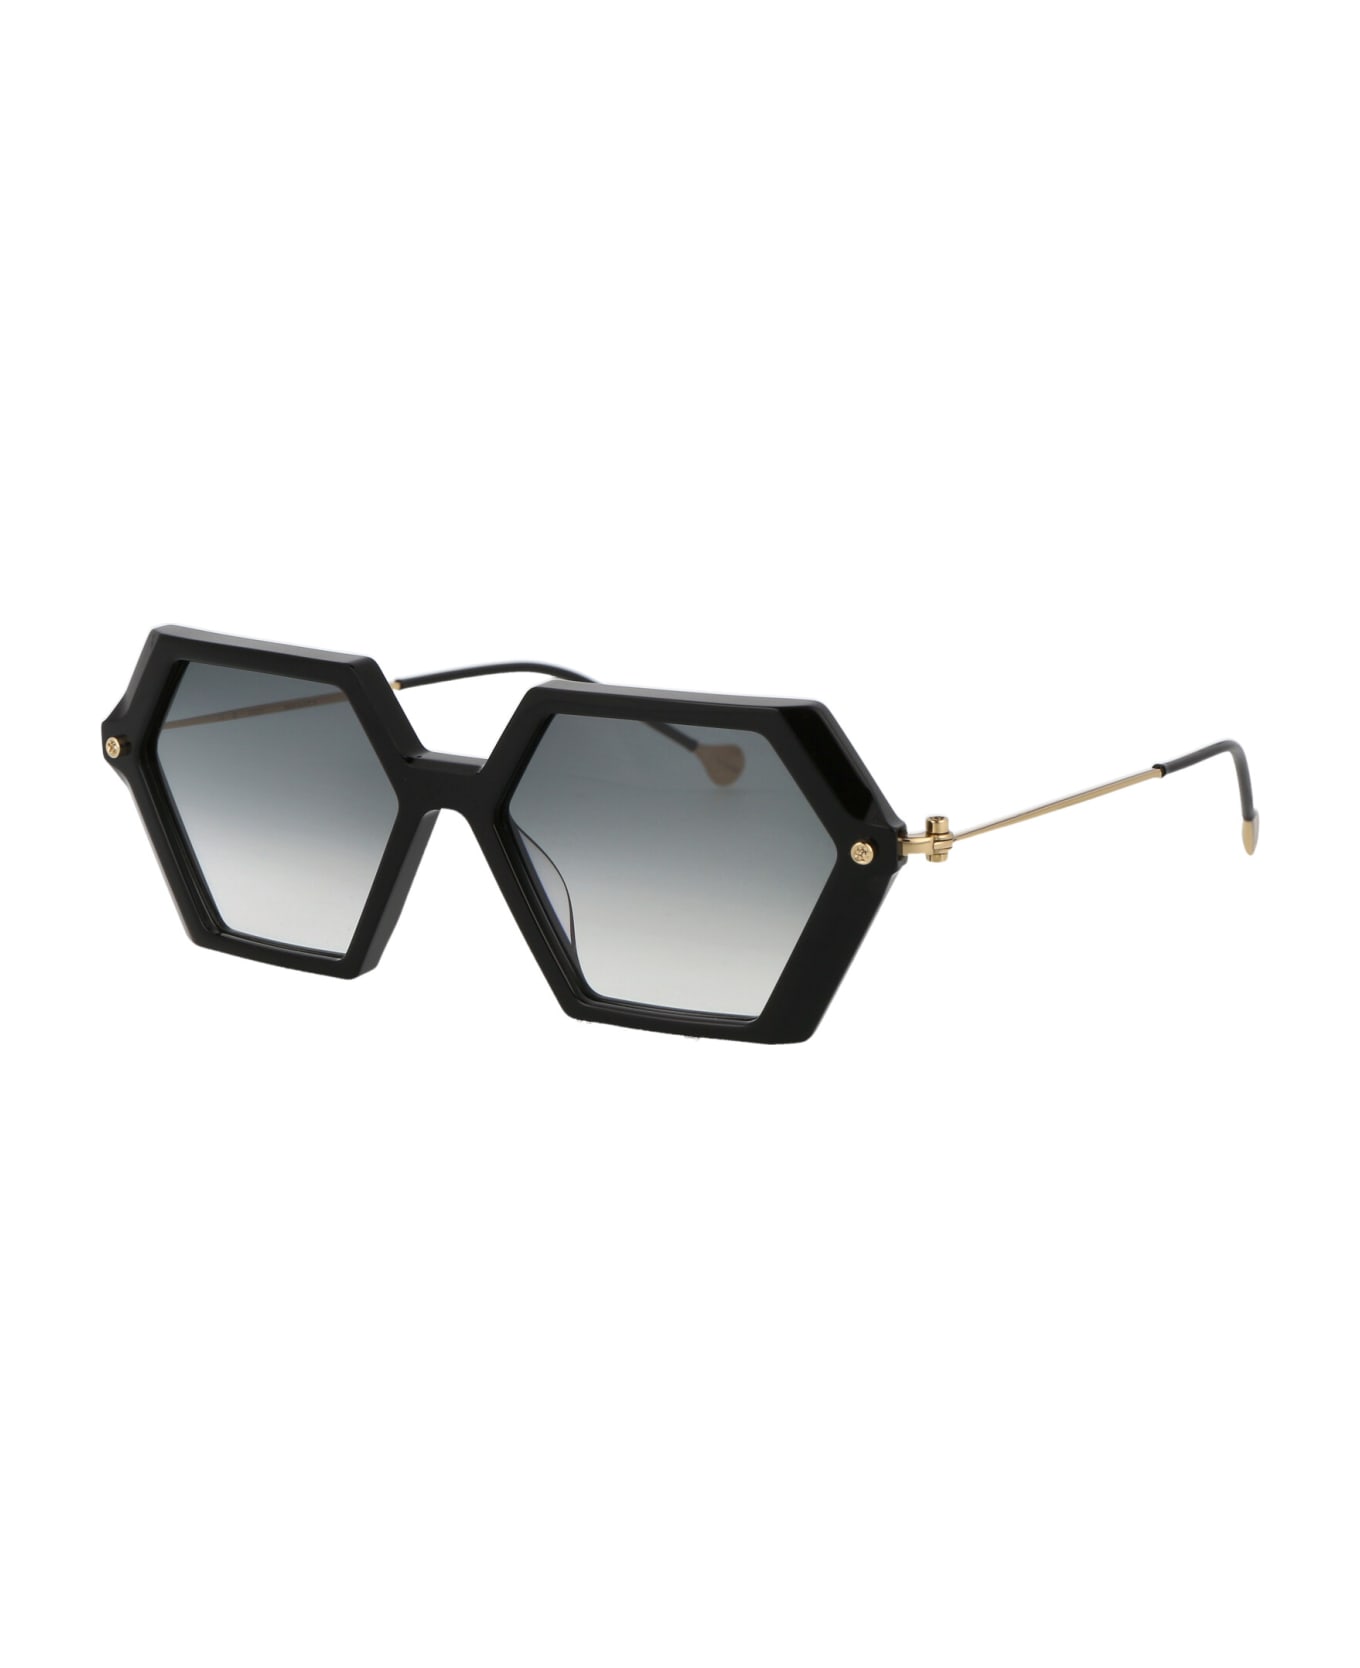 Yohji Yamamoto Slook 007 Sunglasses - M001 PUR BLACK/JAPAN GOLD